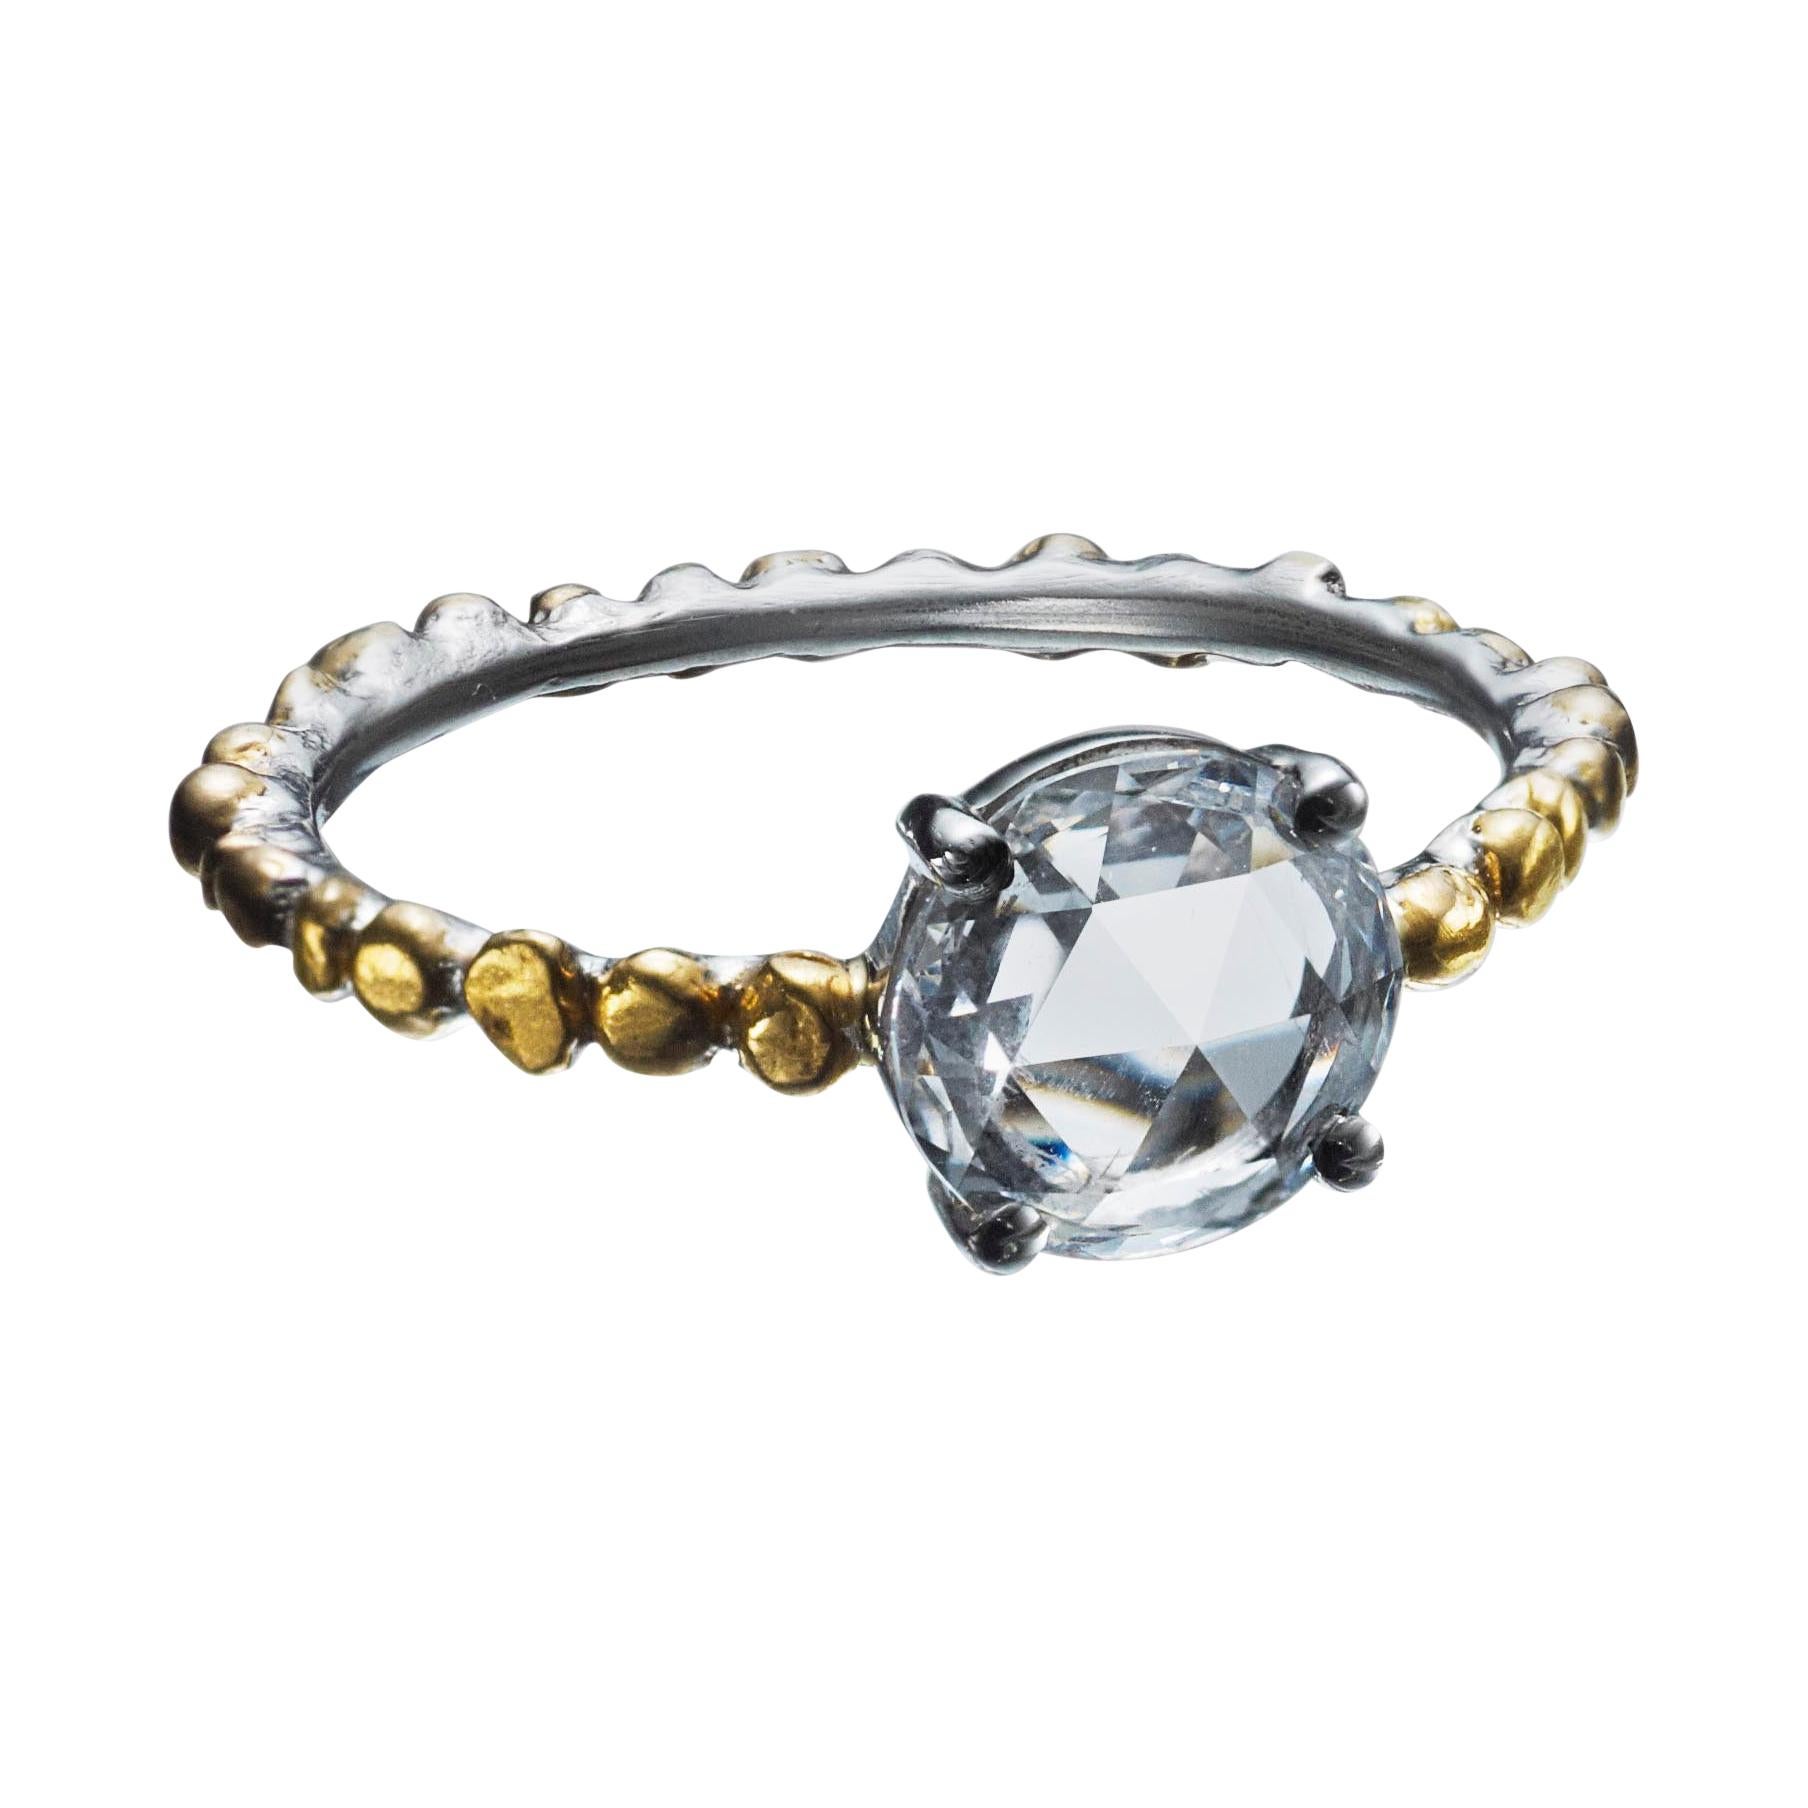 0.72 Carat Rose Cut Diamond Ring in Platinum and 24 Karat Gold